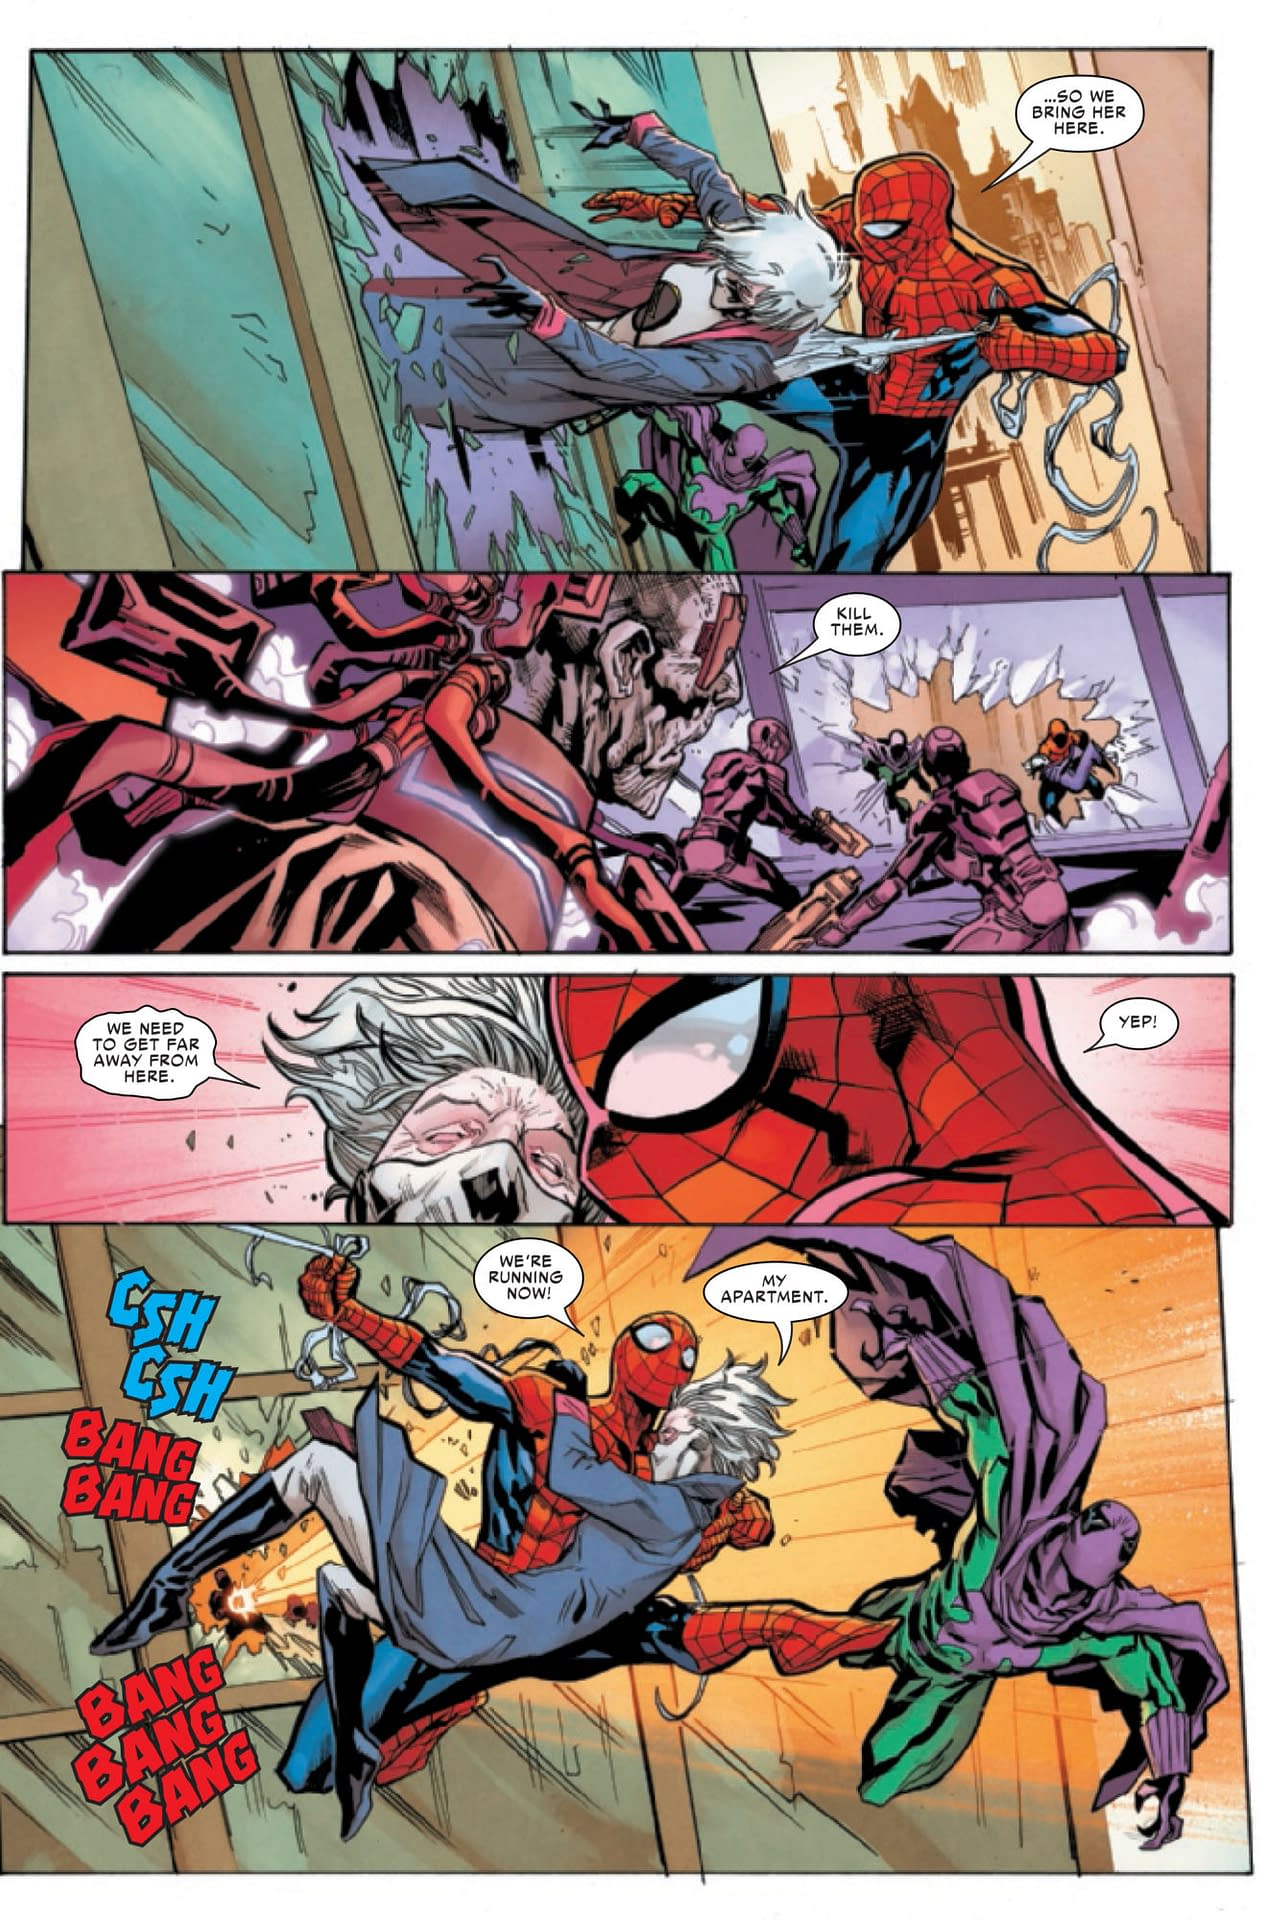 The Secret Origin of The Rumor in Friendly Neighborhood Spider-Man #9